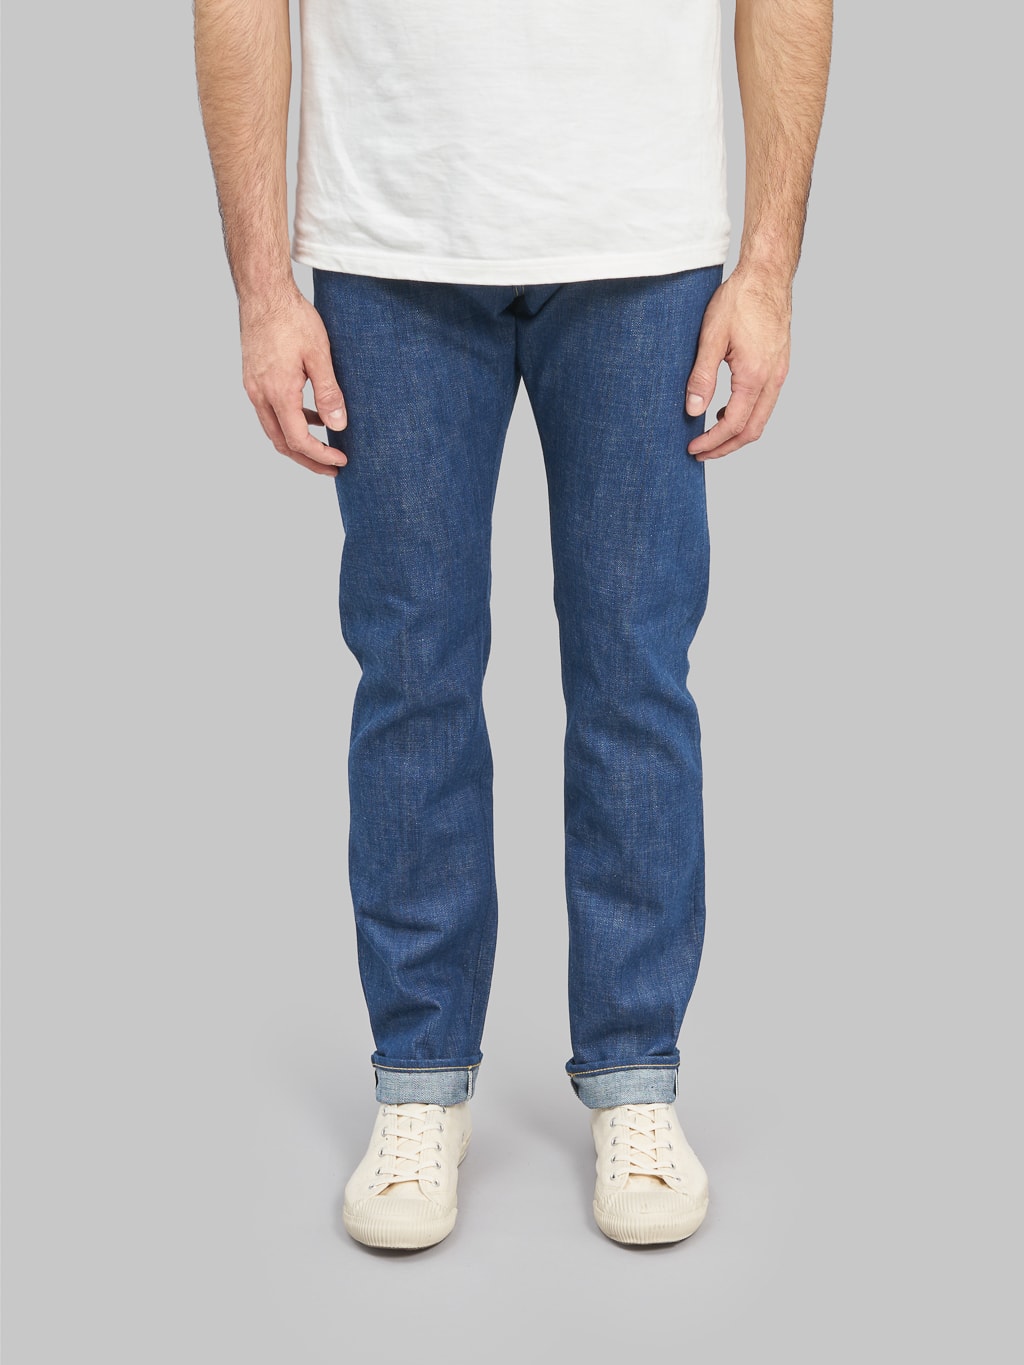 momotaro 0605 ai natural indigo dyed natural tapered denim jeans front fit